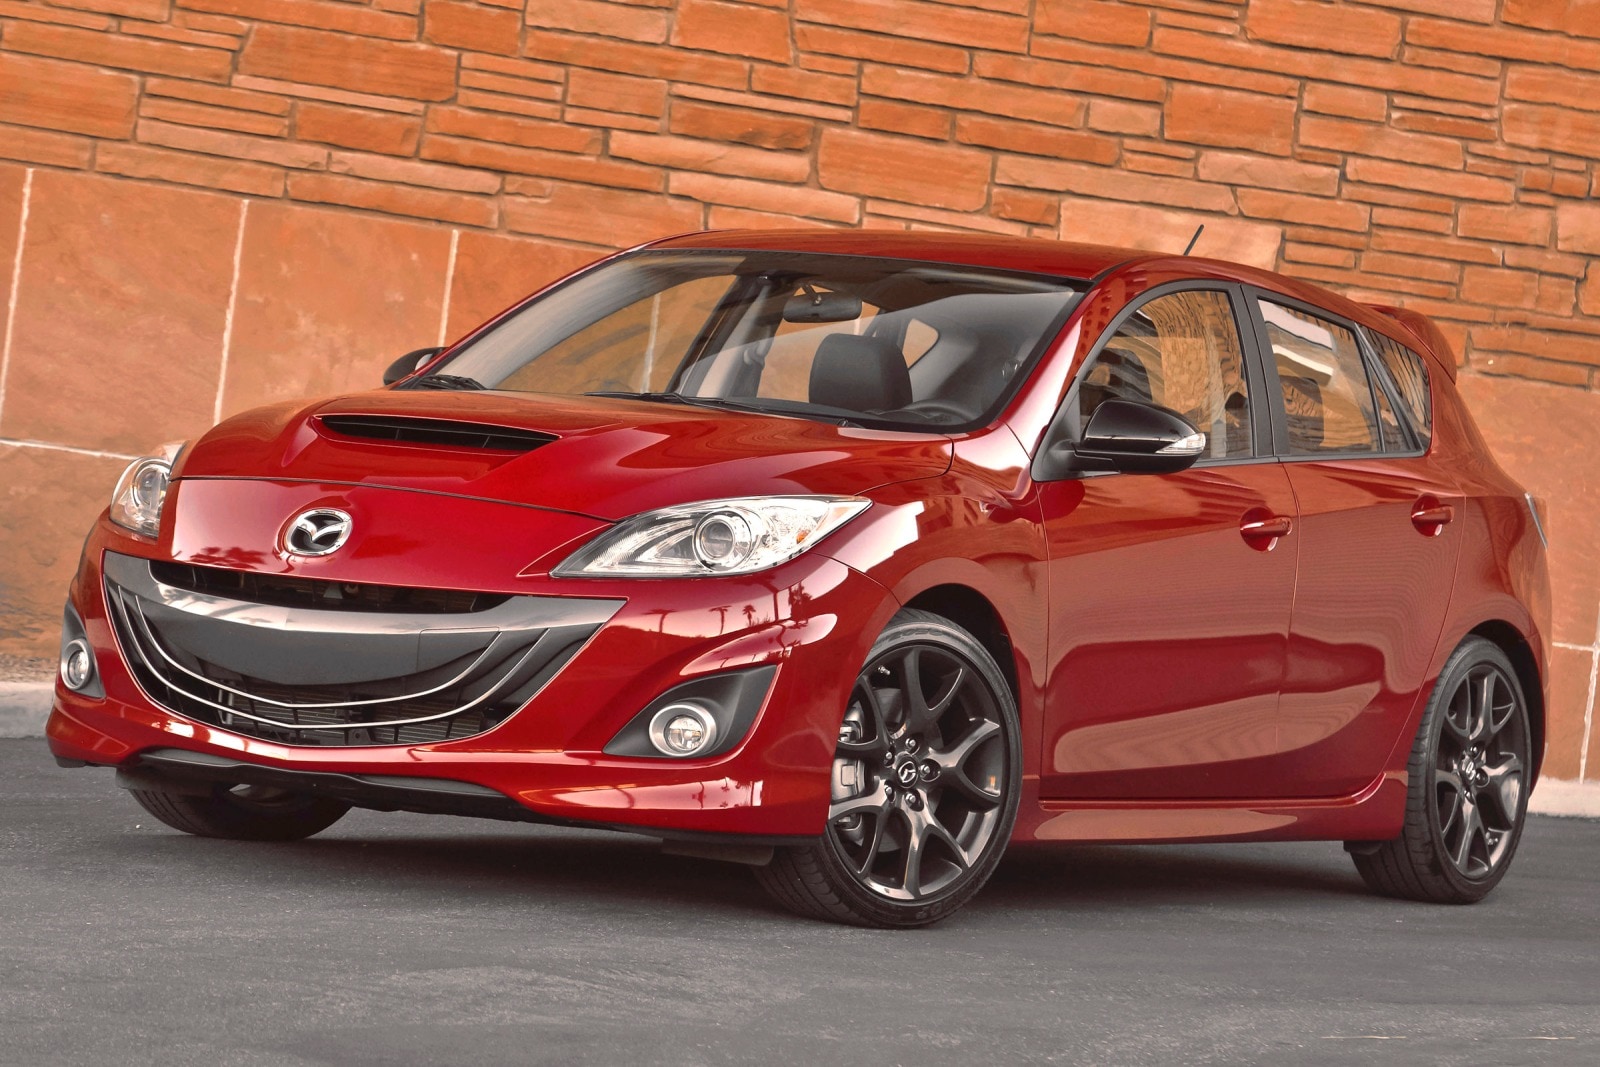 2012 Mazda Mazdaspeed 3 Review & Ratings | Edmunds